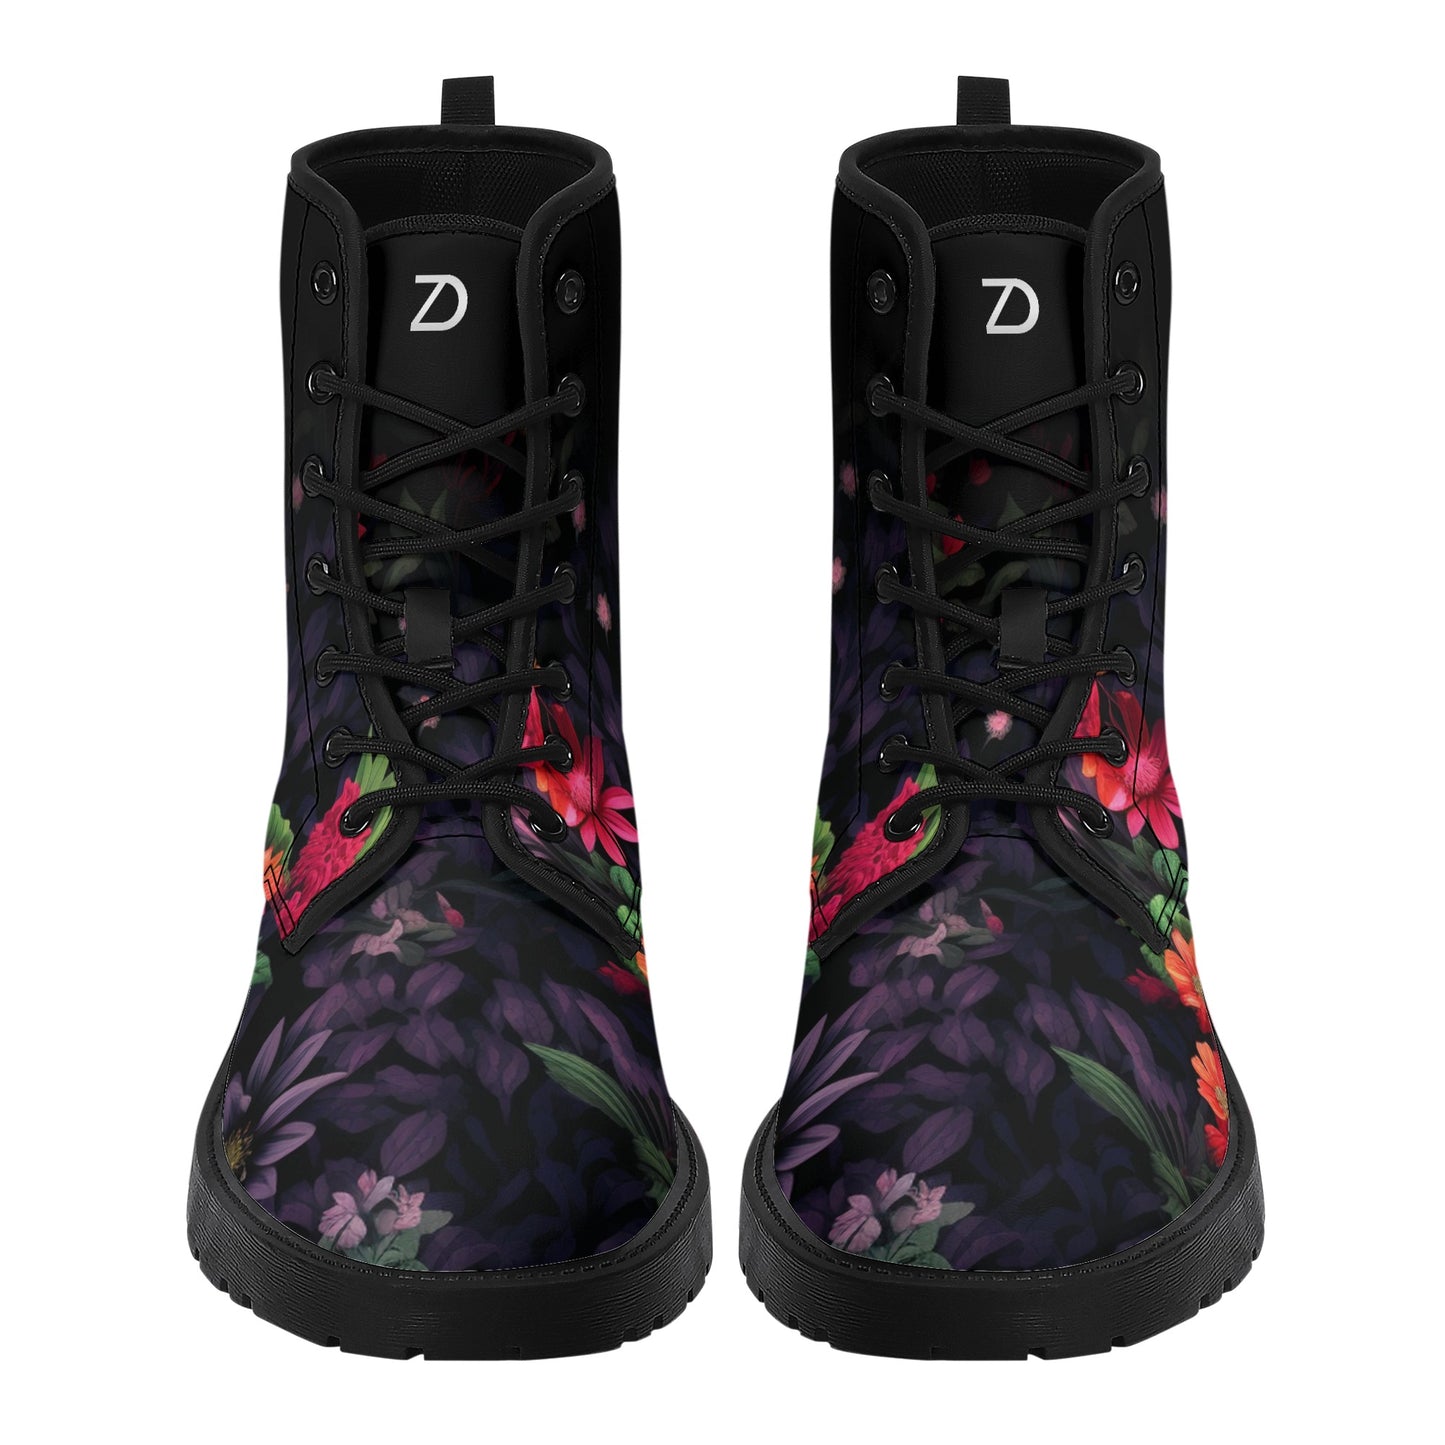 Neduz Designs Artified Womens Floral Combat Boots - Eco-Friendly Leather, Black Gum Rubber Outsole